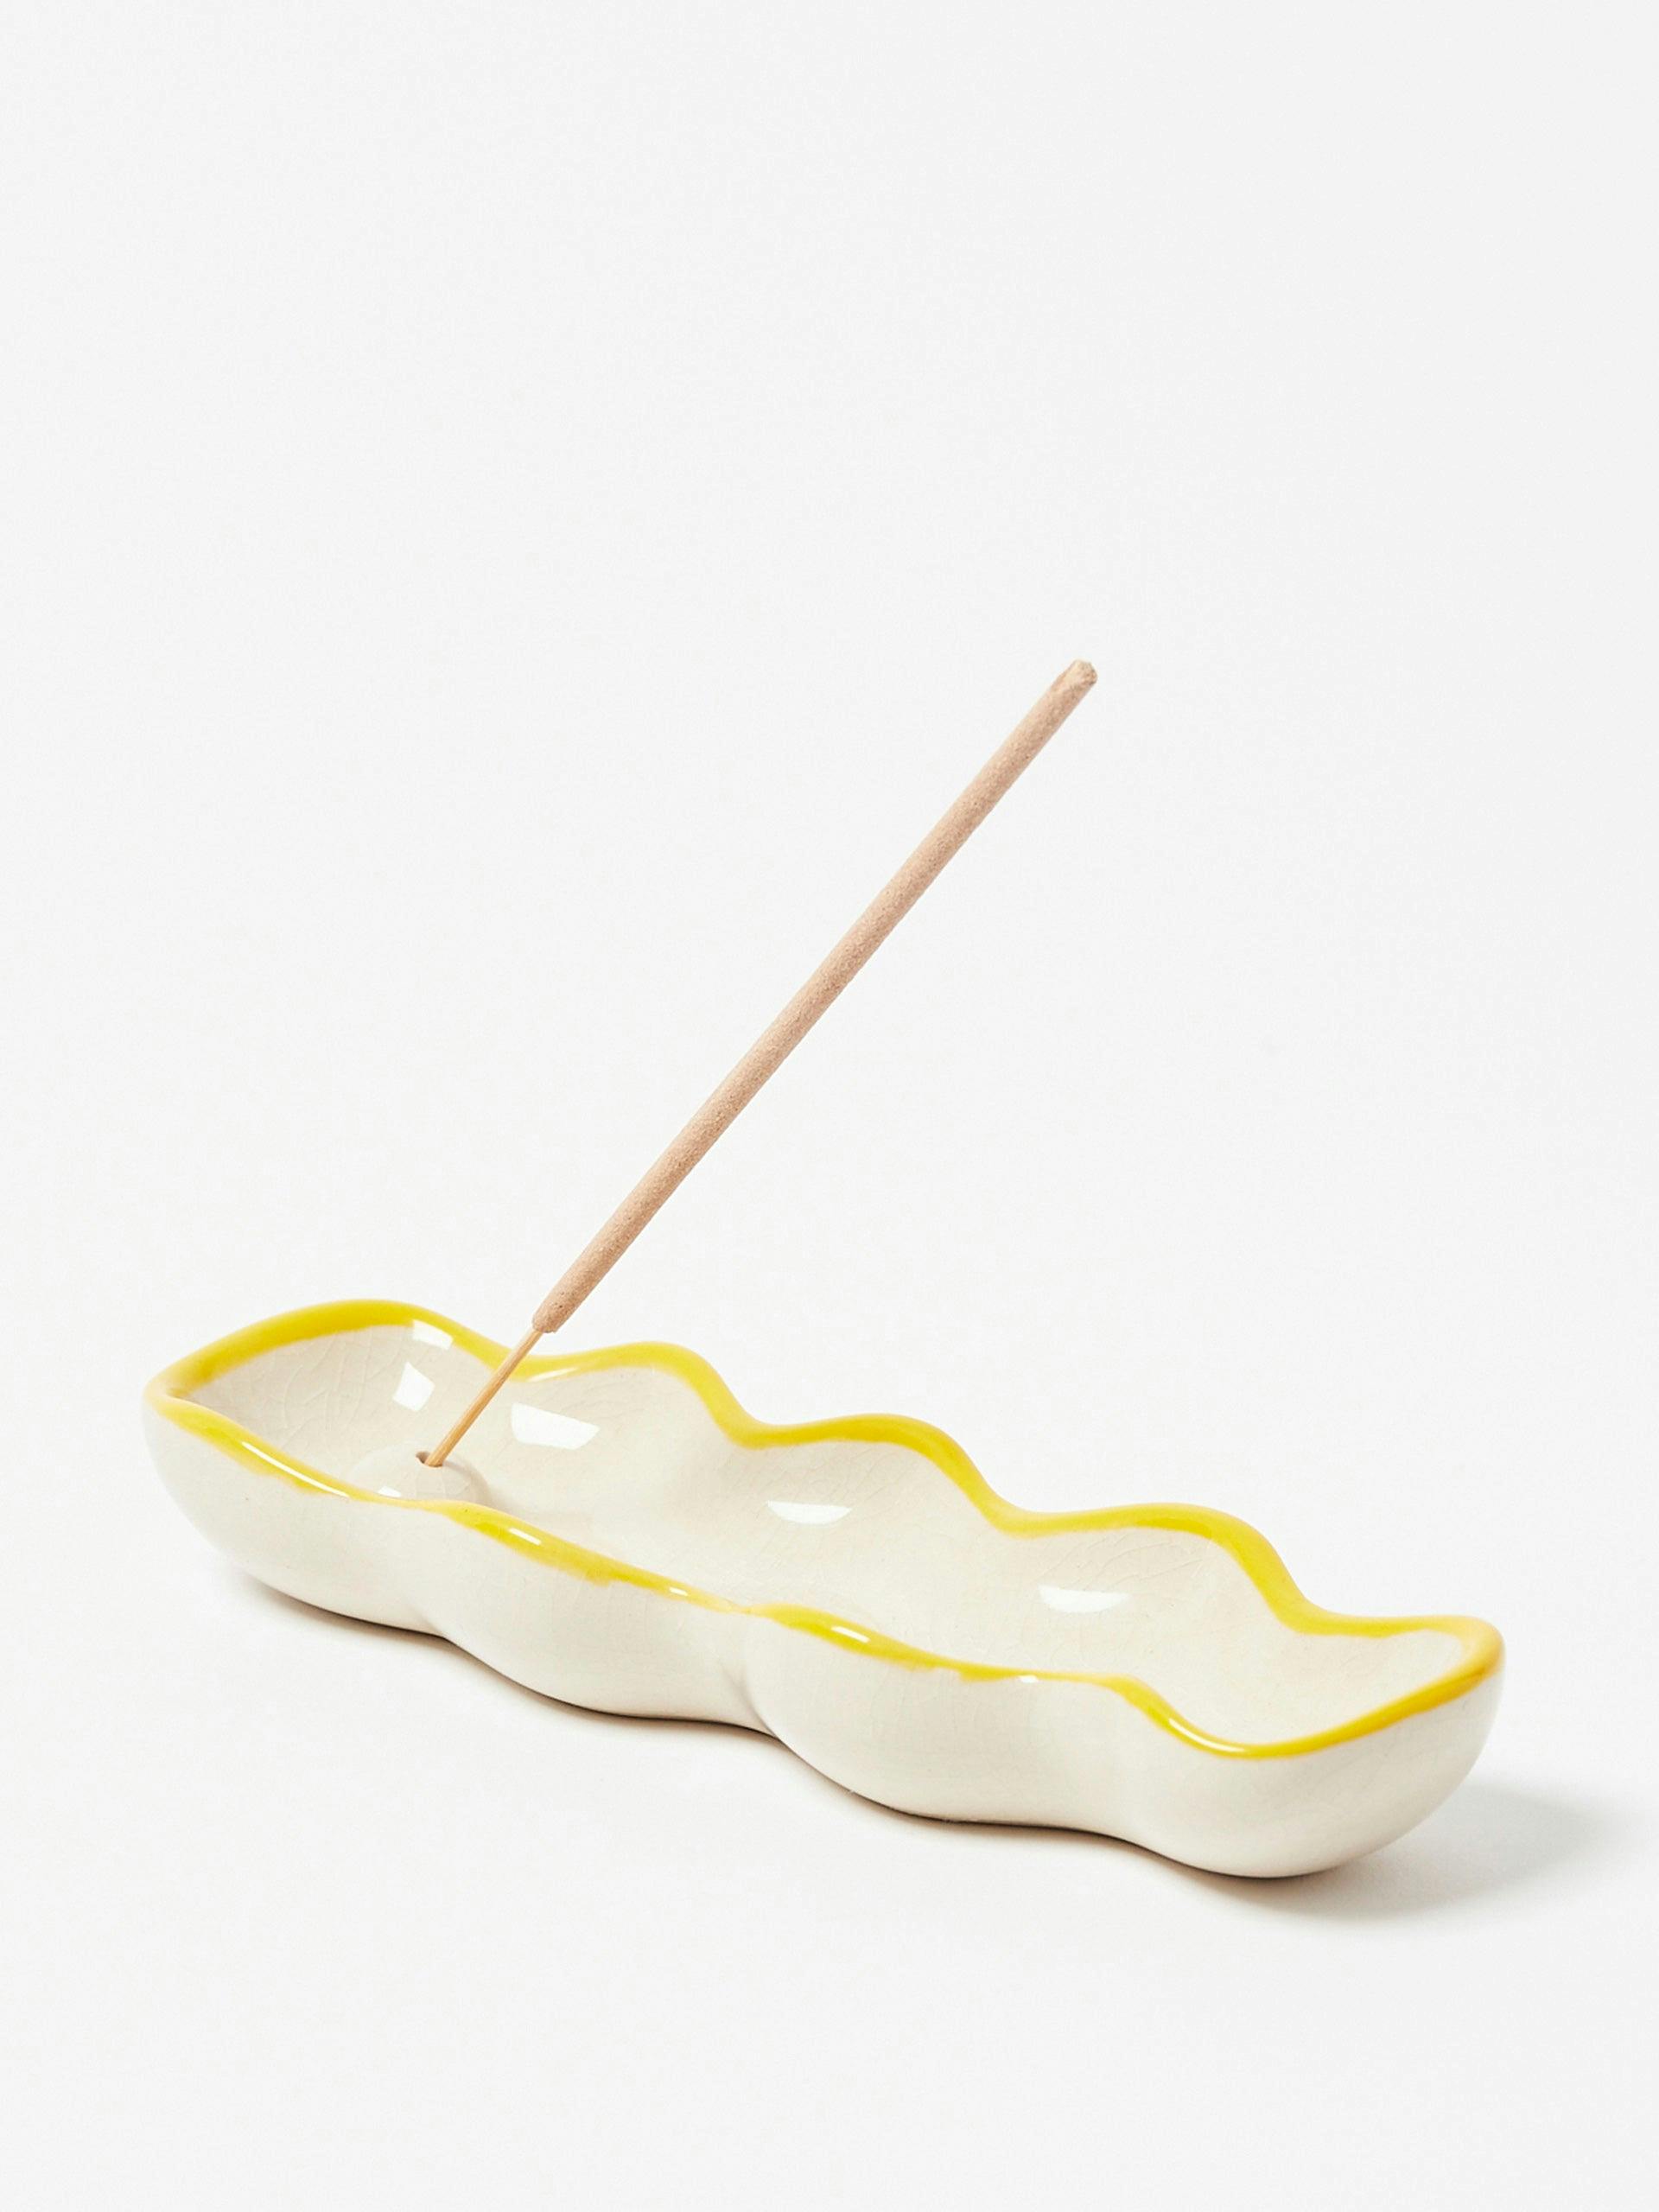 Wavy yellow edged ceramic incense holder